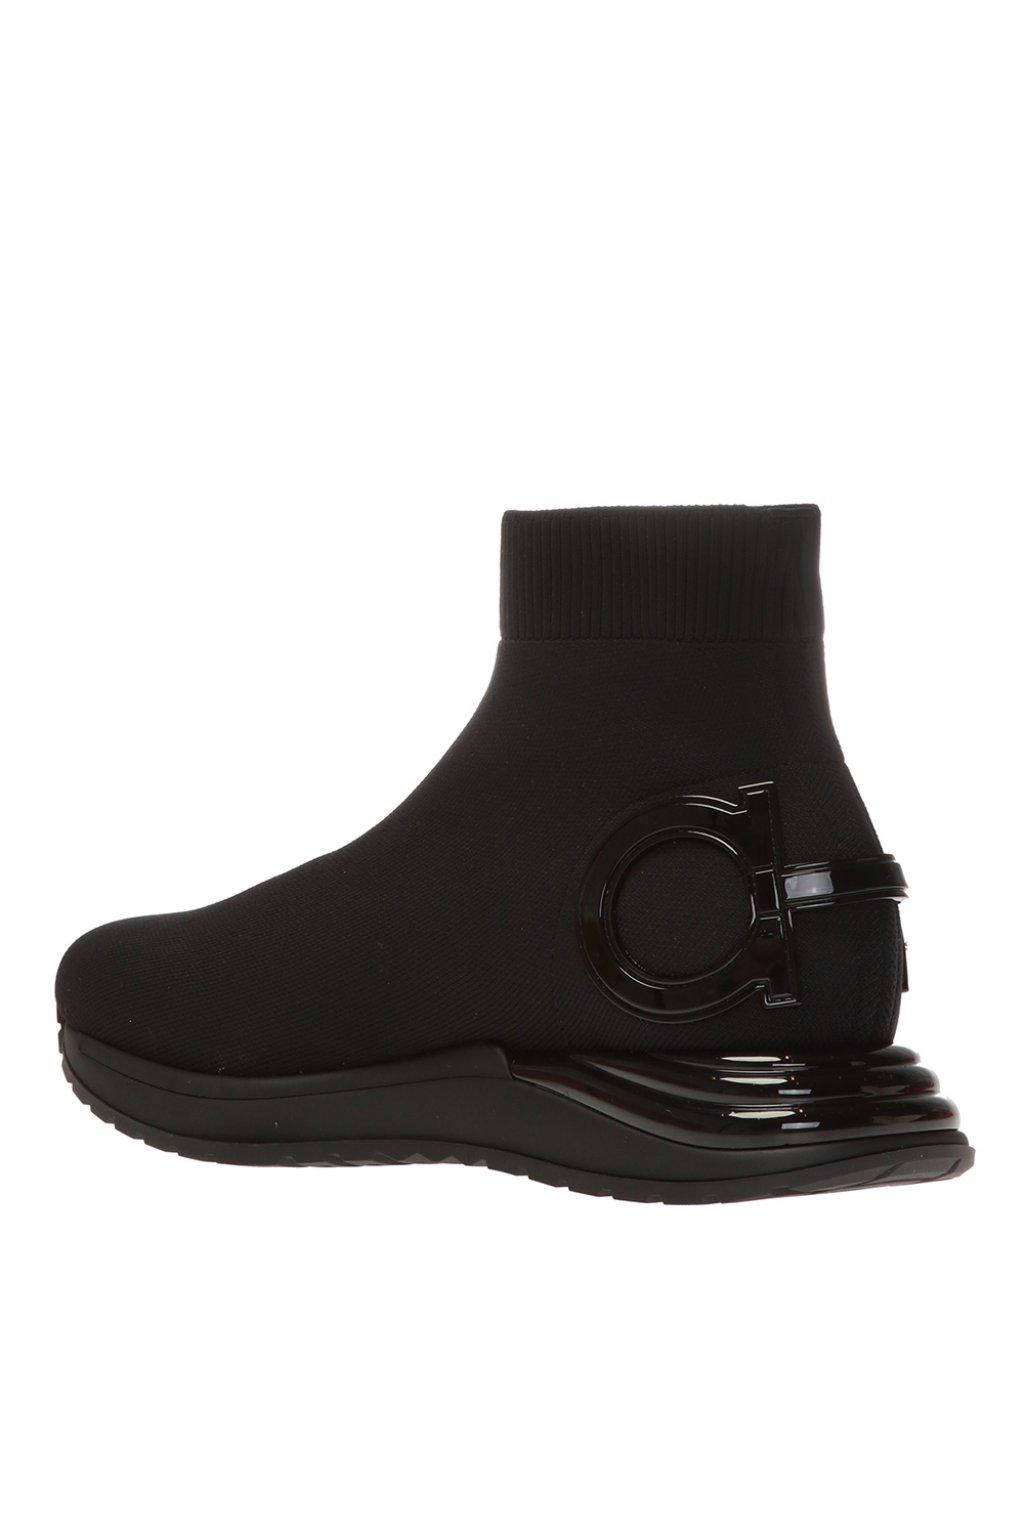 Ferragamo Leather Gardena Sock Sneakers in Black - Save 34% - Lyst